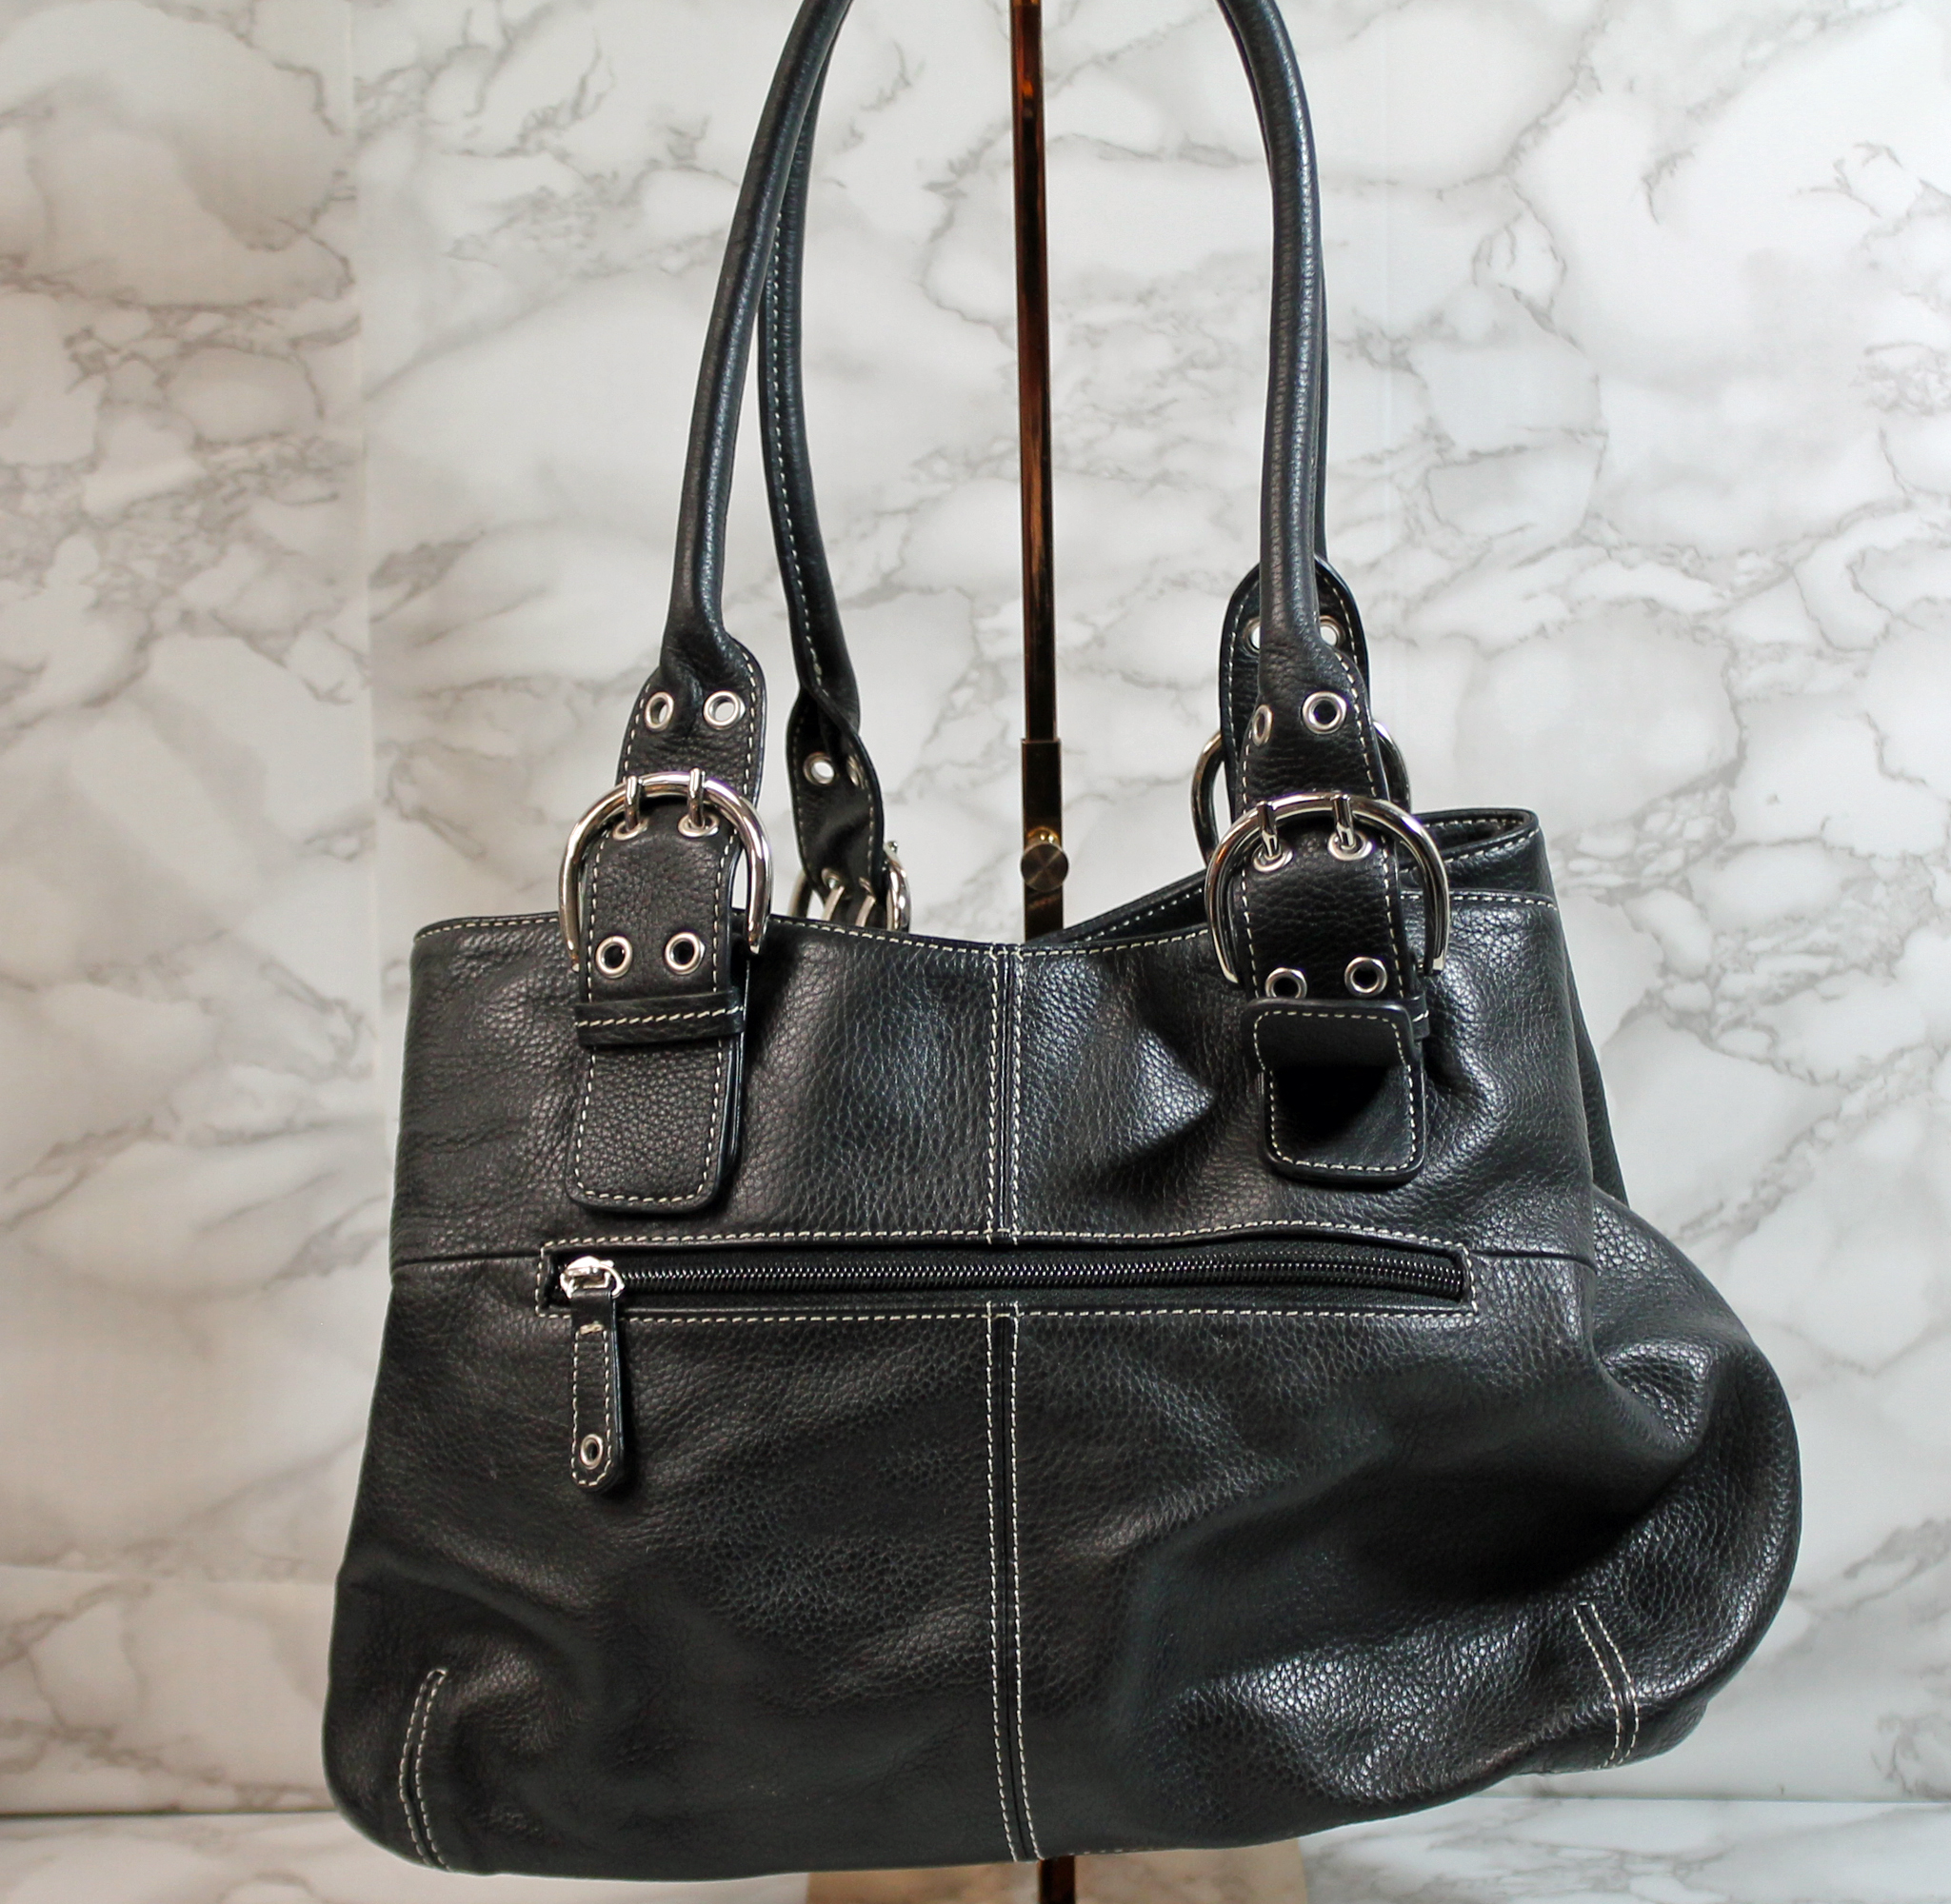 Tignanello Black Leather Shoulder Bag Handbag (AP 612 ) | eBay